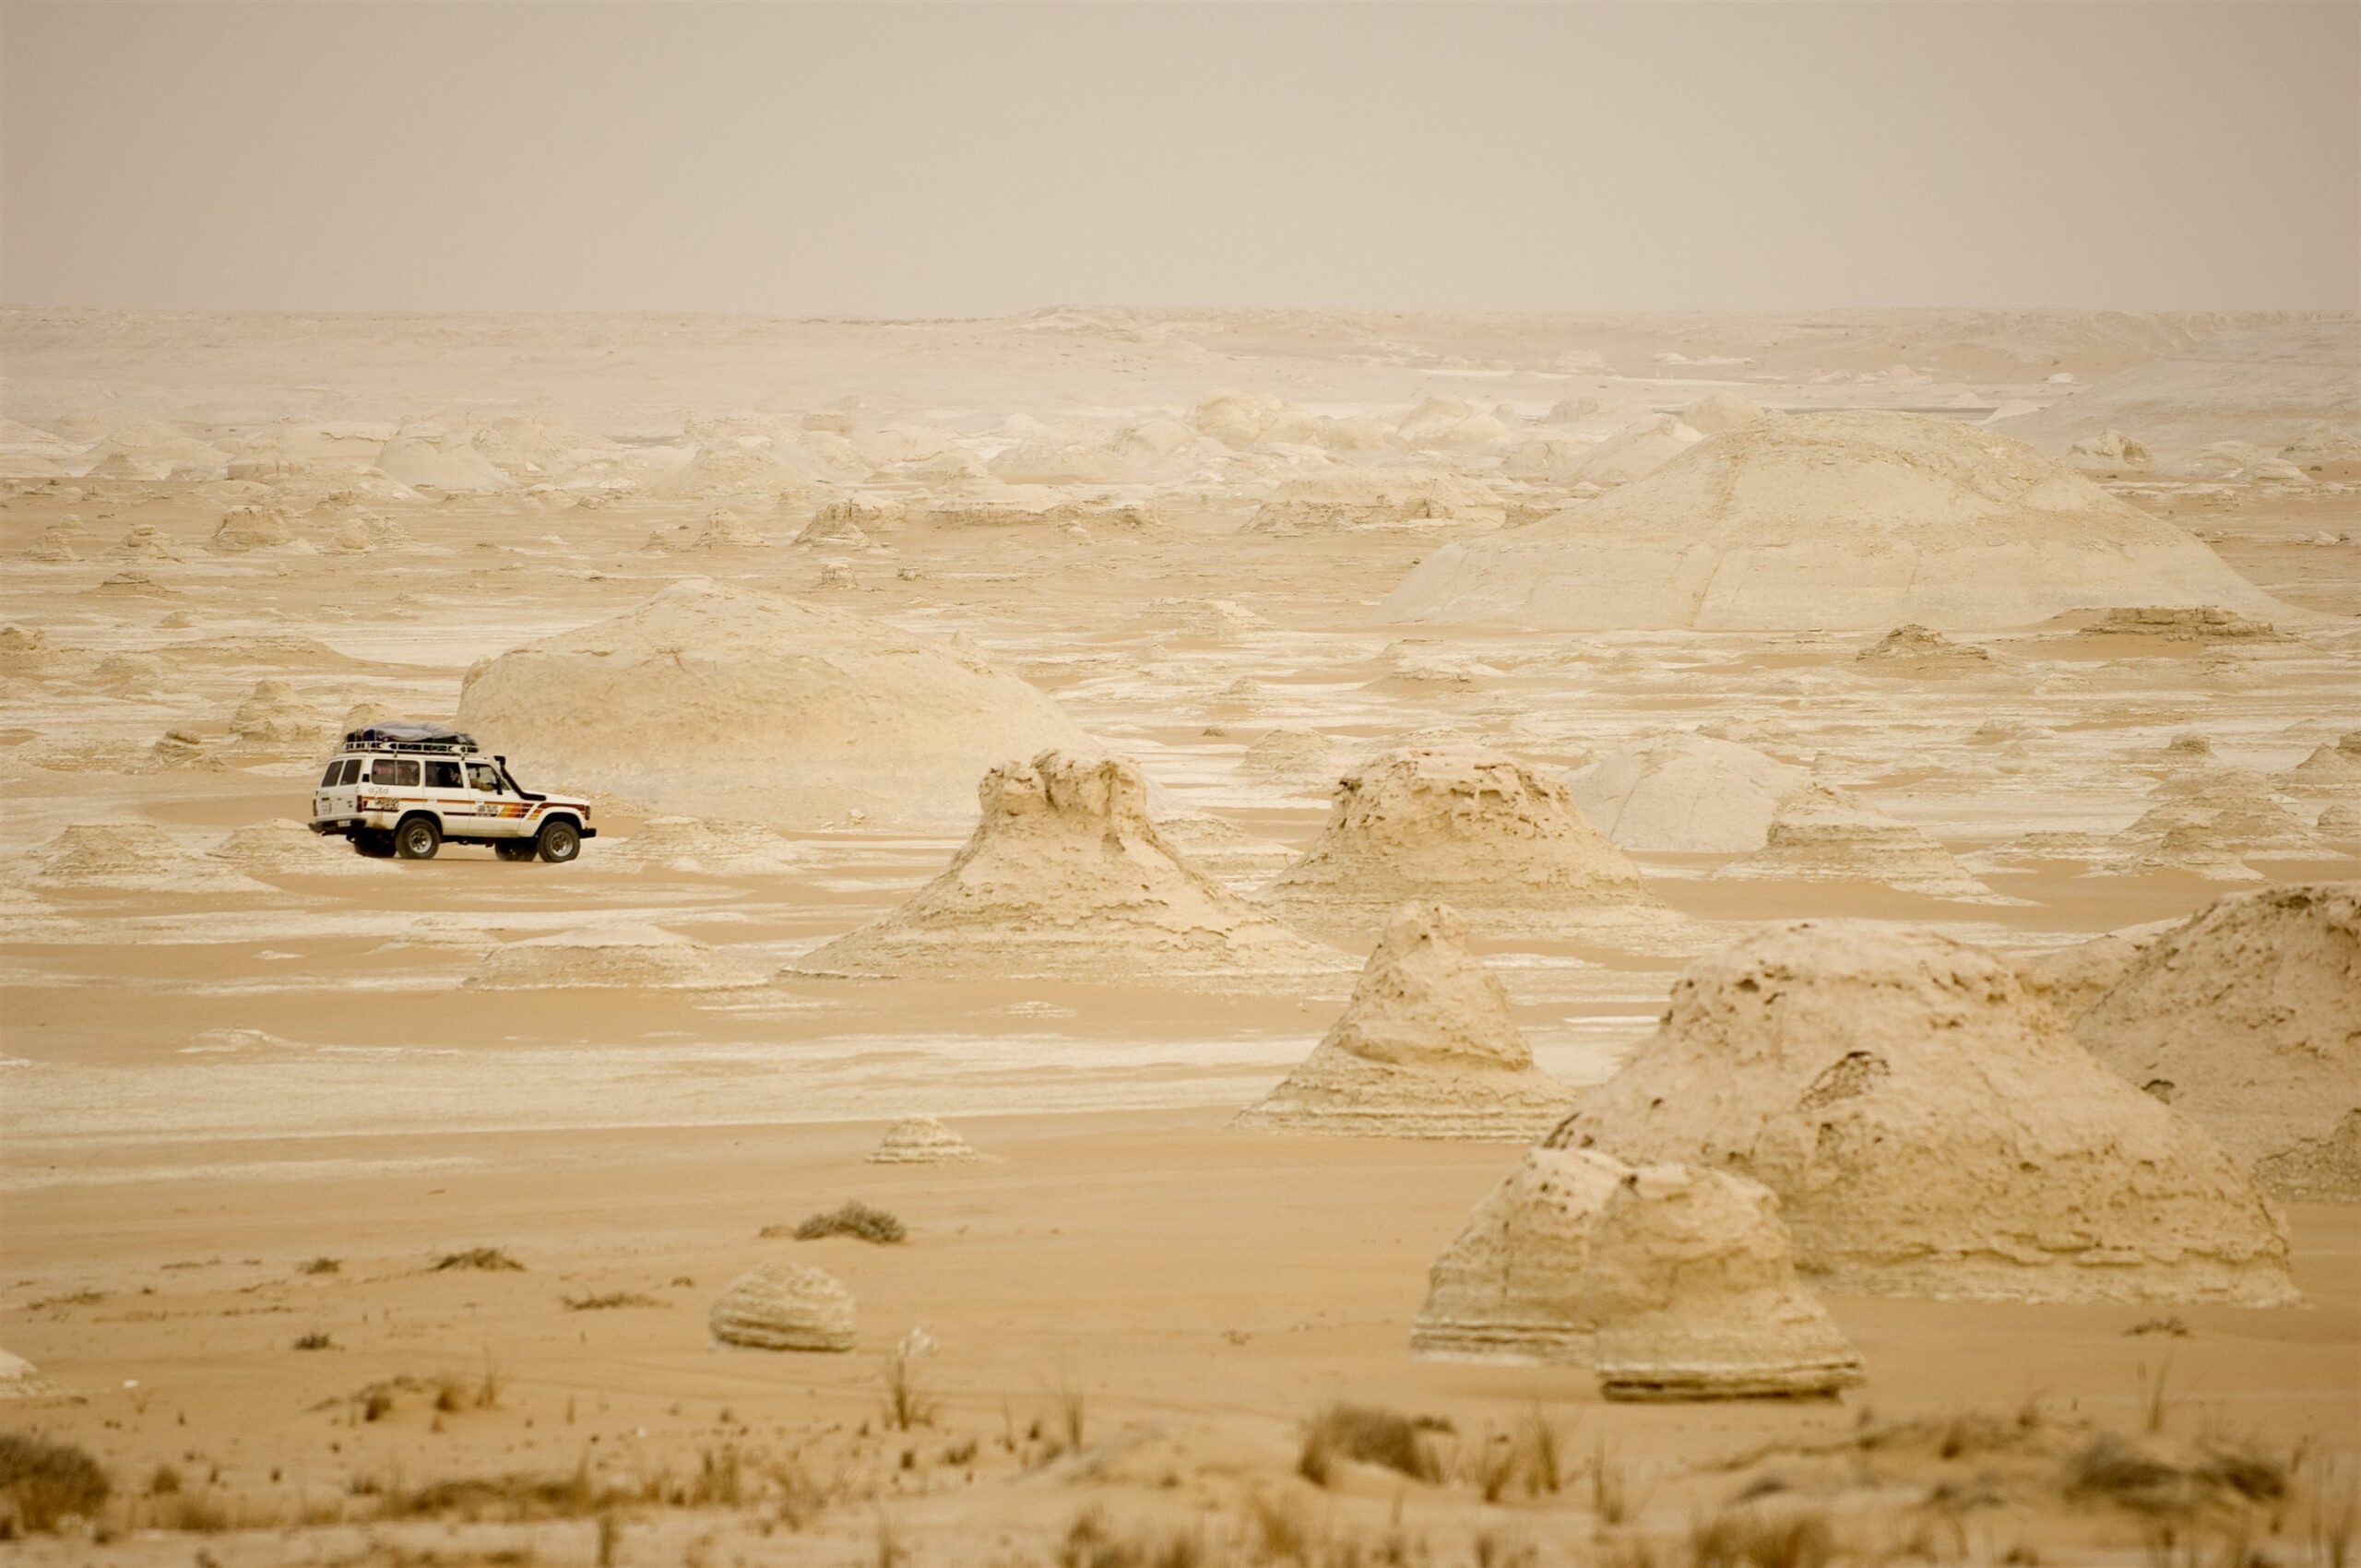 jeep driving through sand in desert on safari in Egypt